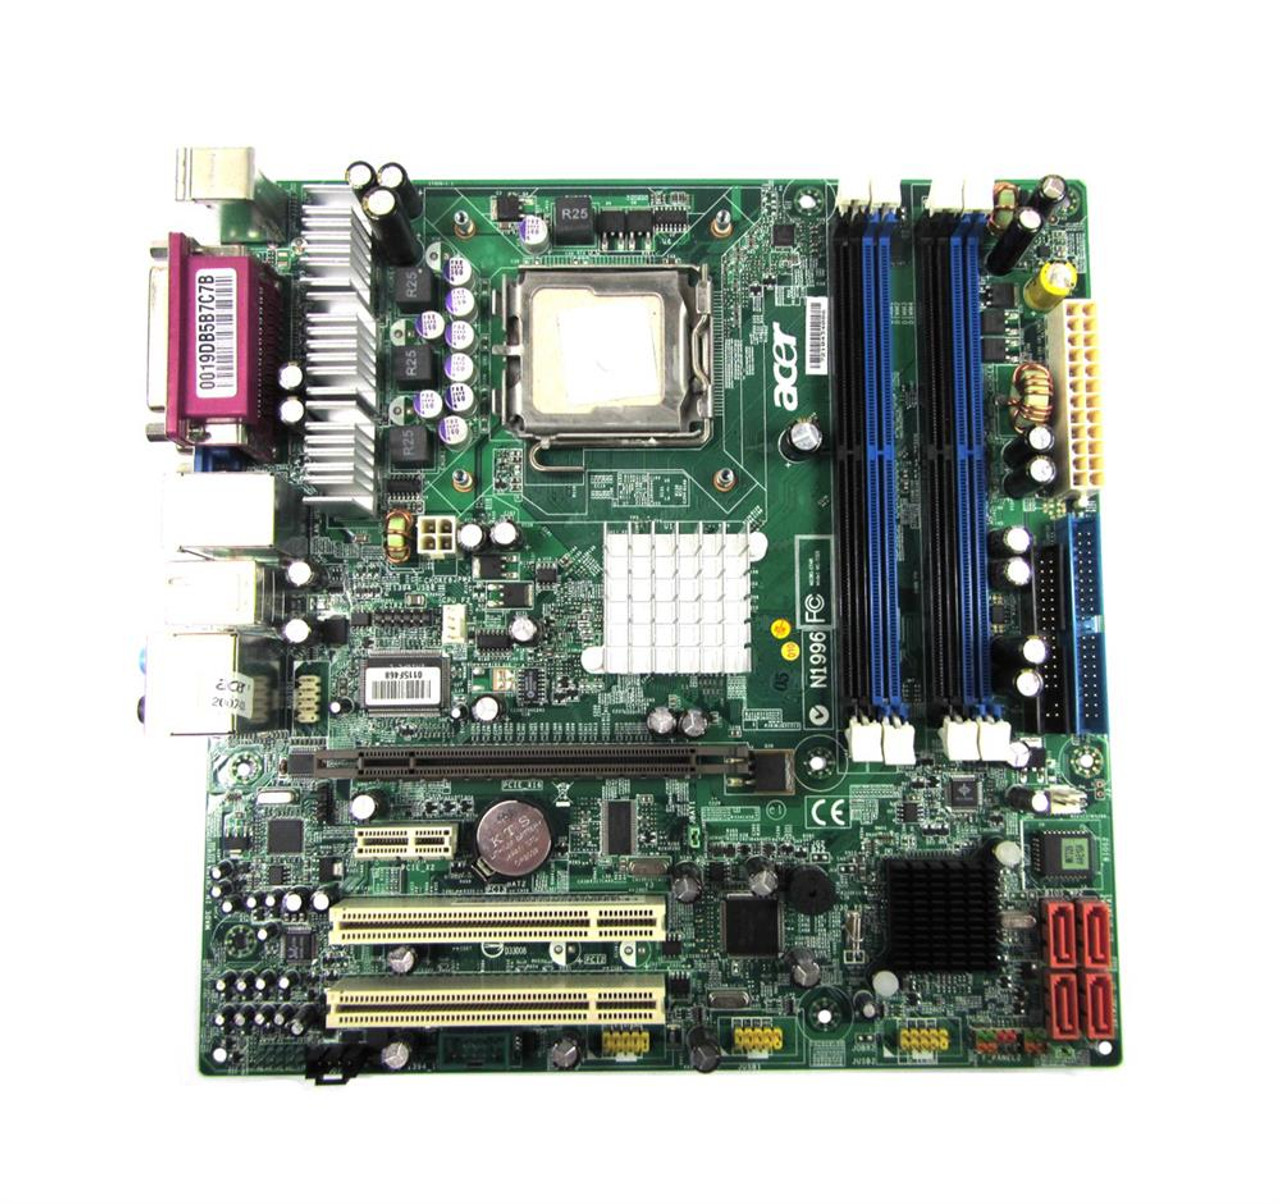 MS-7326 Acer System Board (Motherboard) for Aspire E571 T671 (Refurbished)